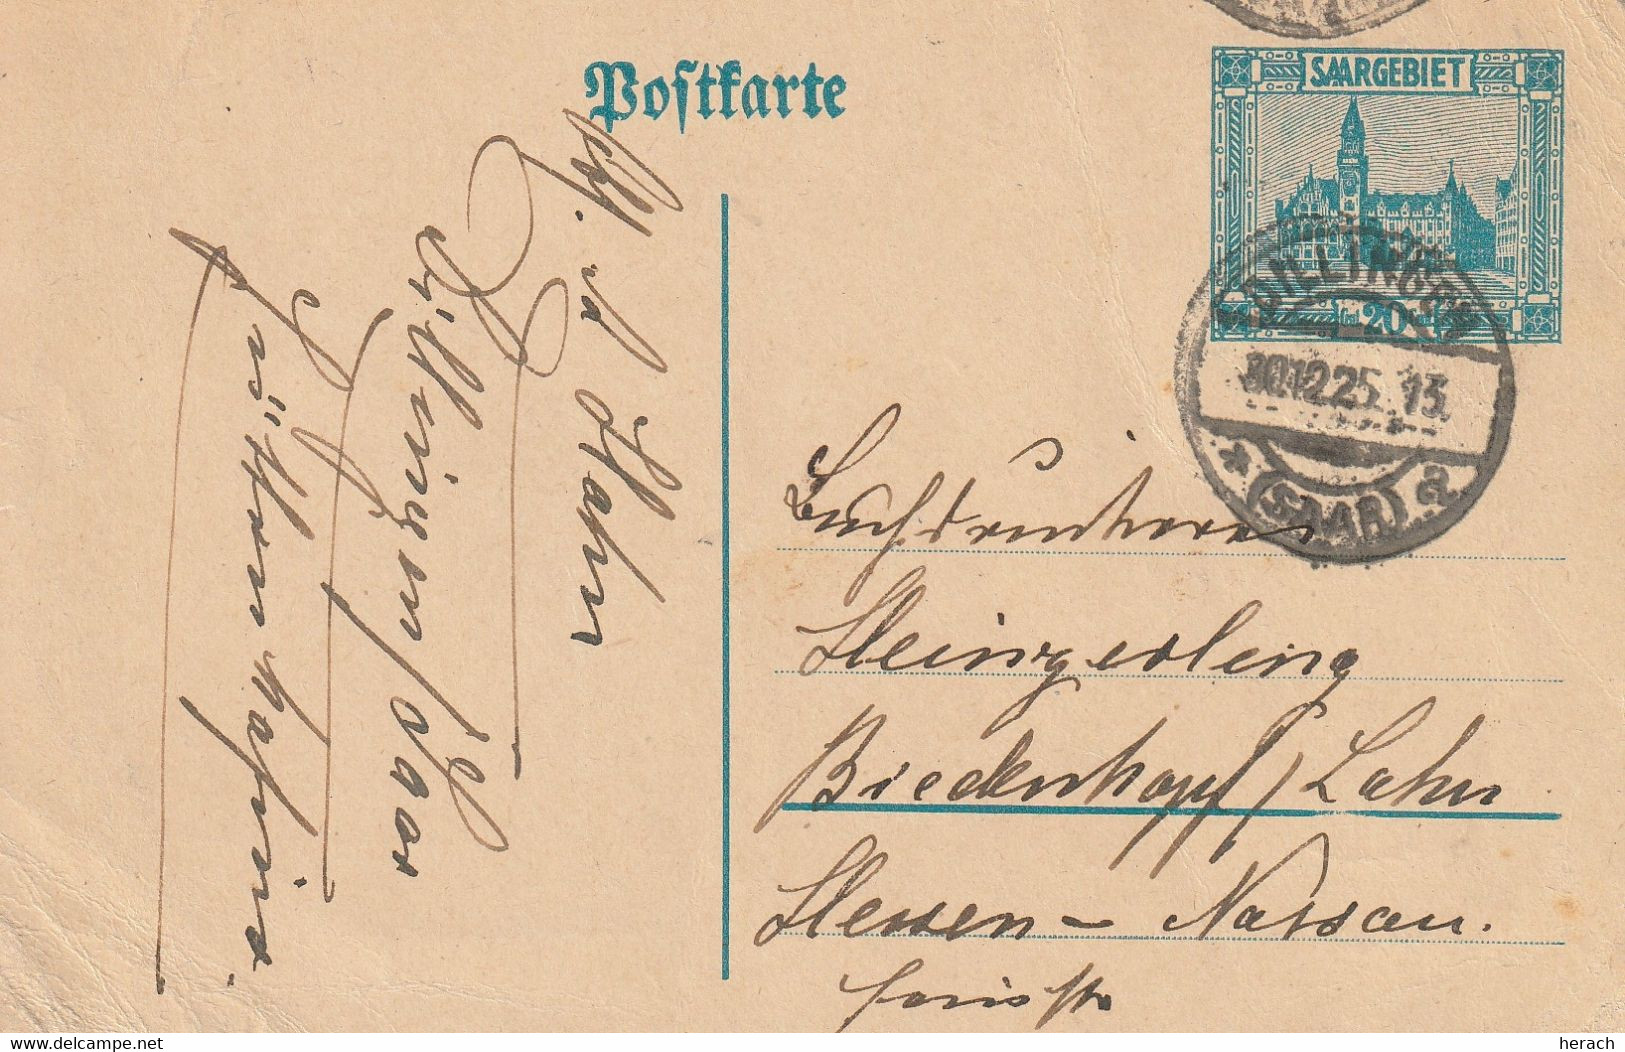 Sarre Entier Postal Dillingen 1925 - Interi Postali